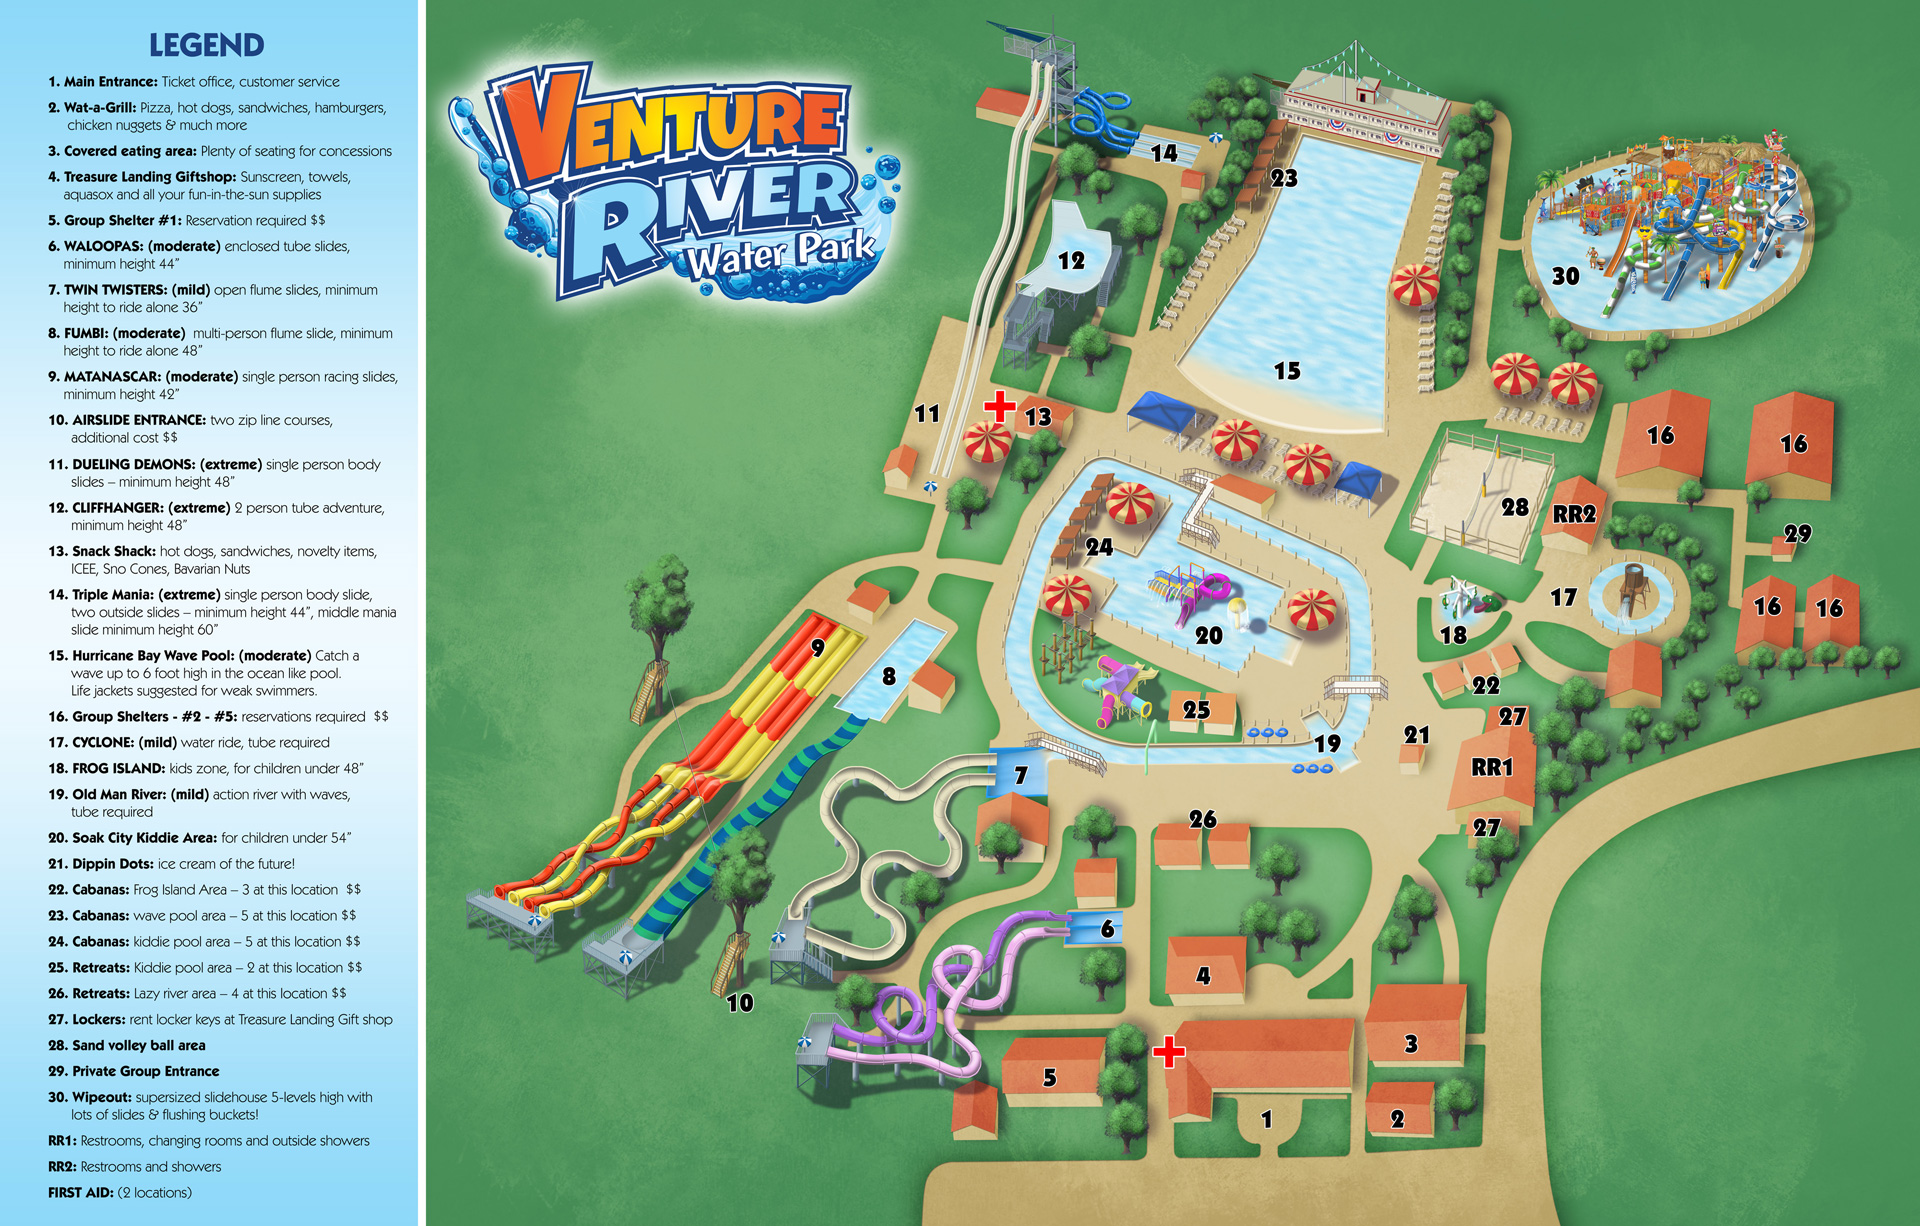 Venture River Water Park 56